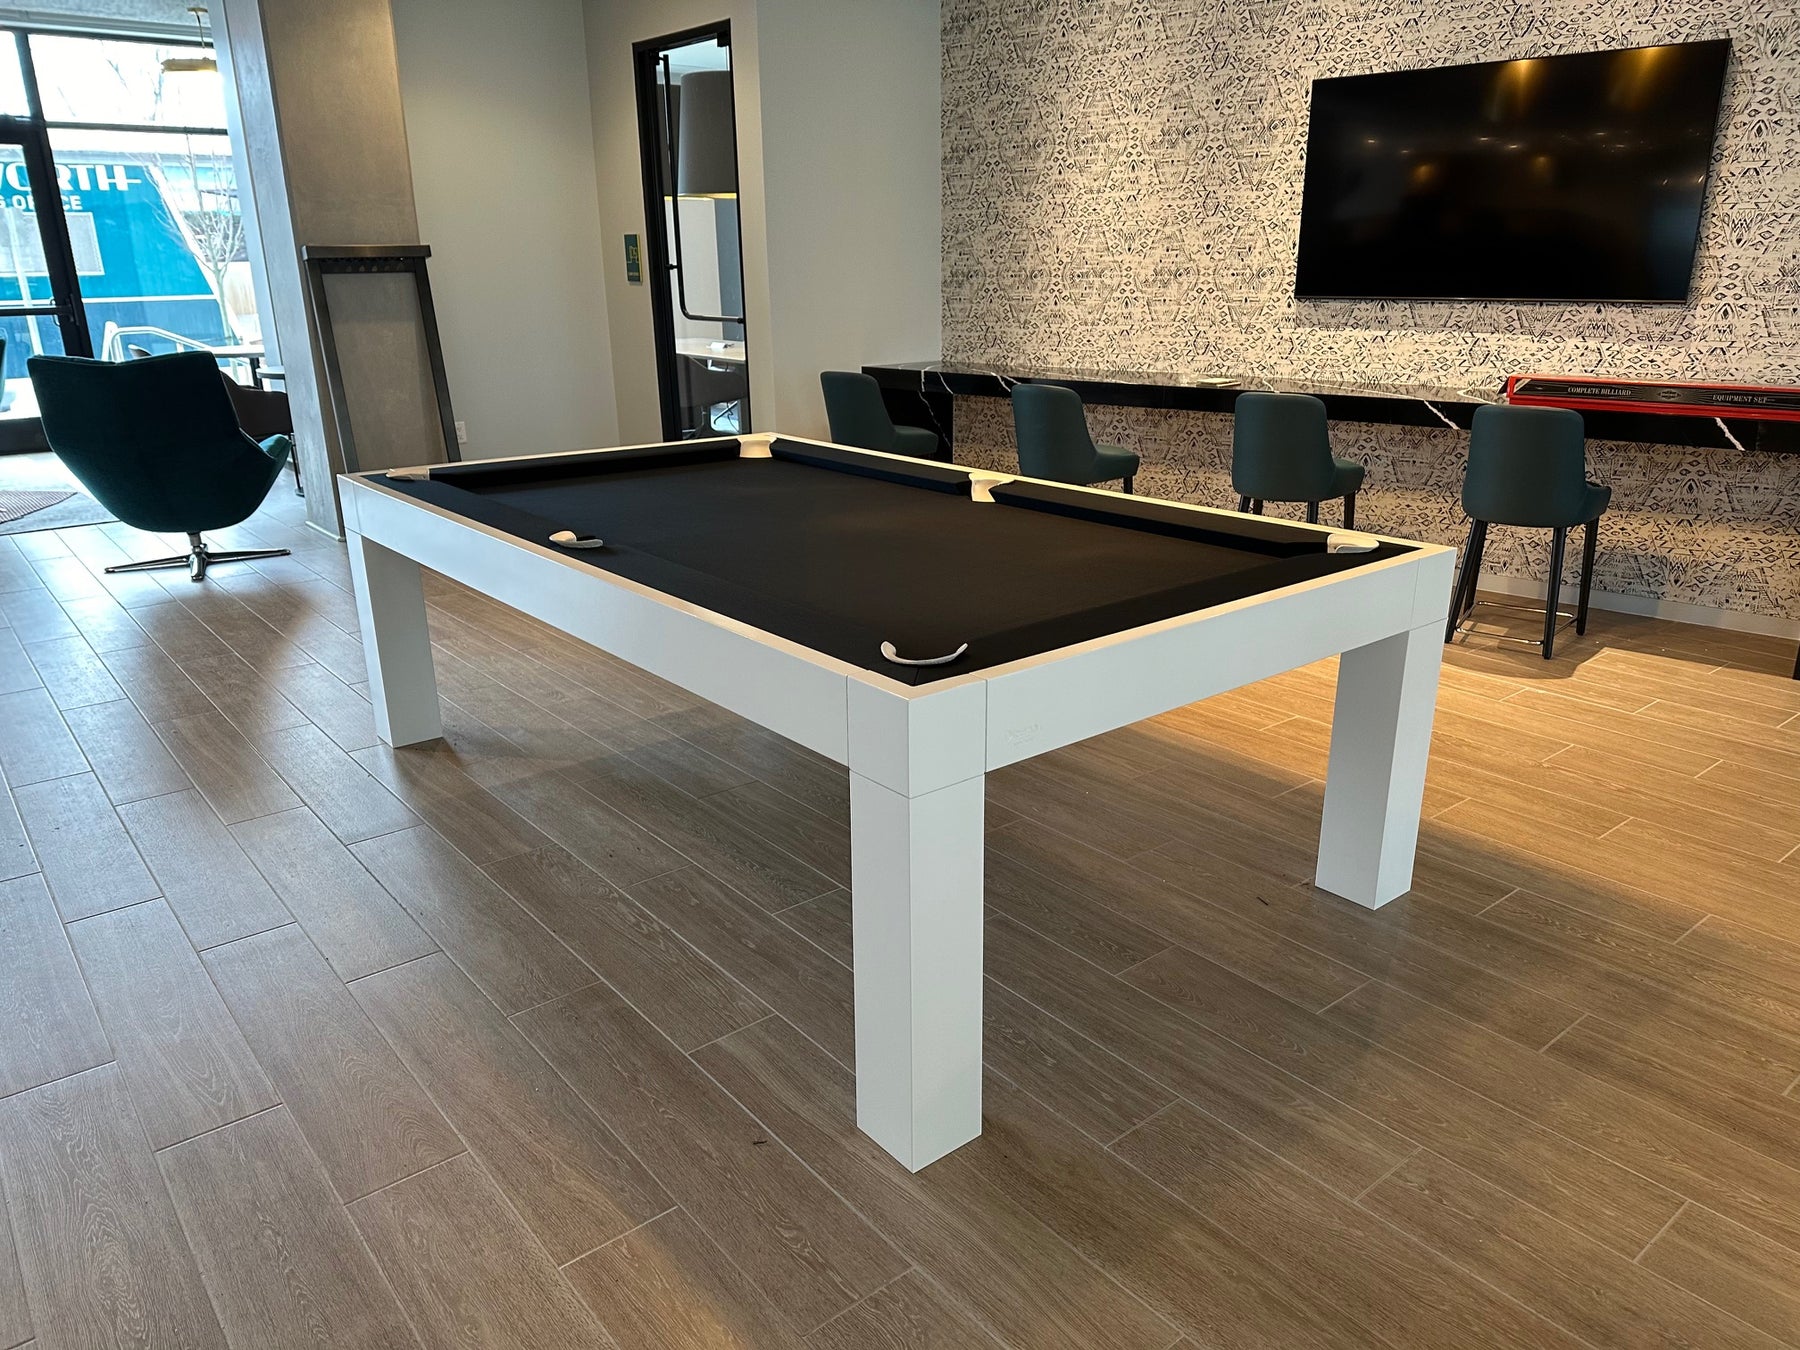 Canada Billiard Dream Pool Table installed in Washington DC